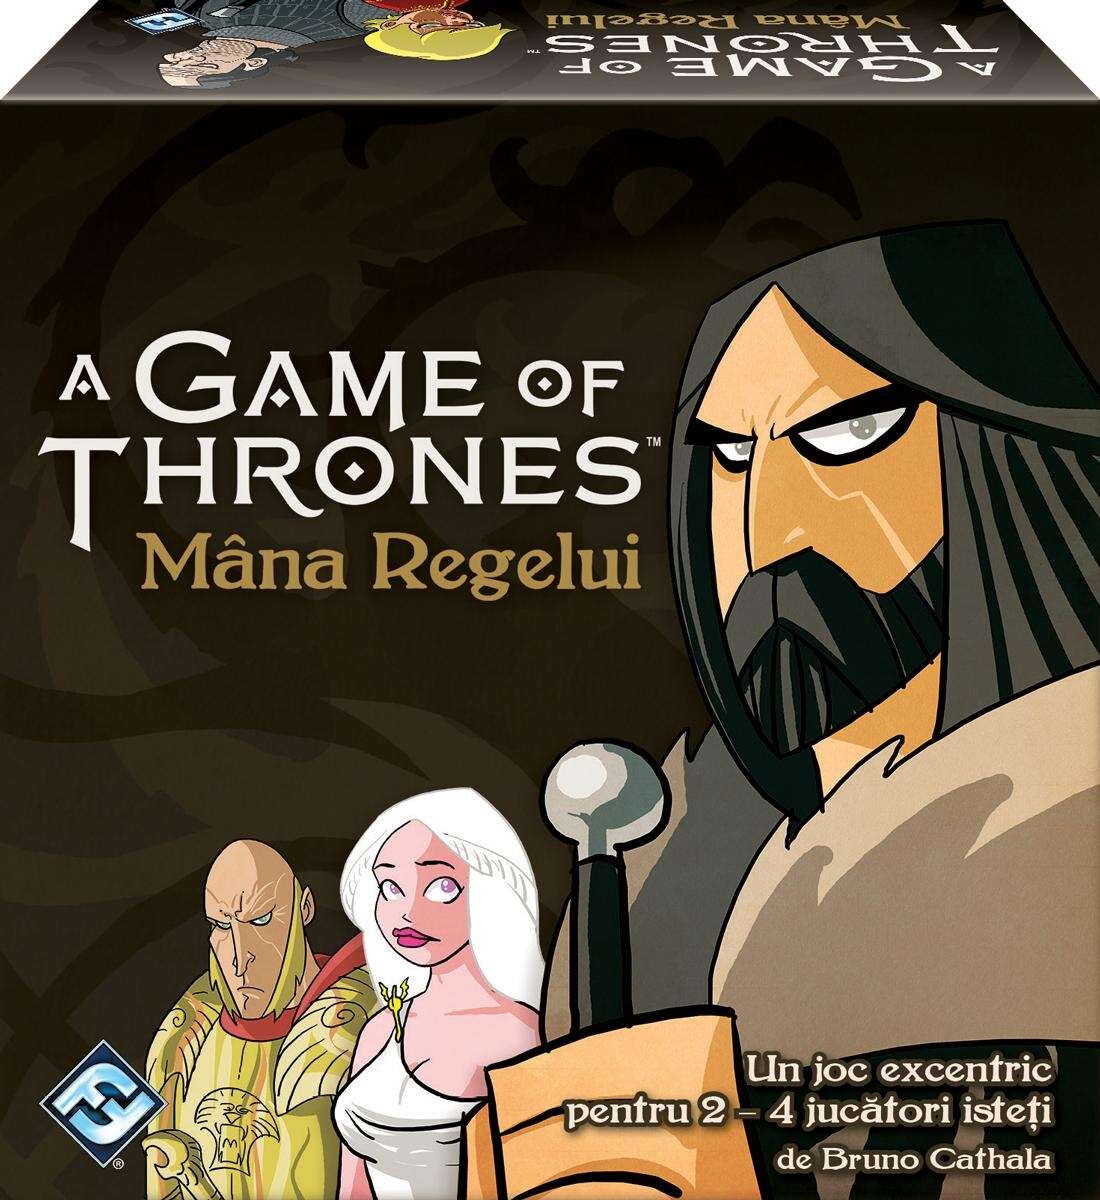 A Game of Thrones - Mana Regelui | Fantasy Flight Games